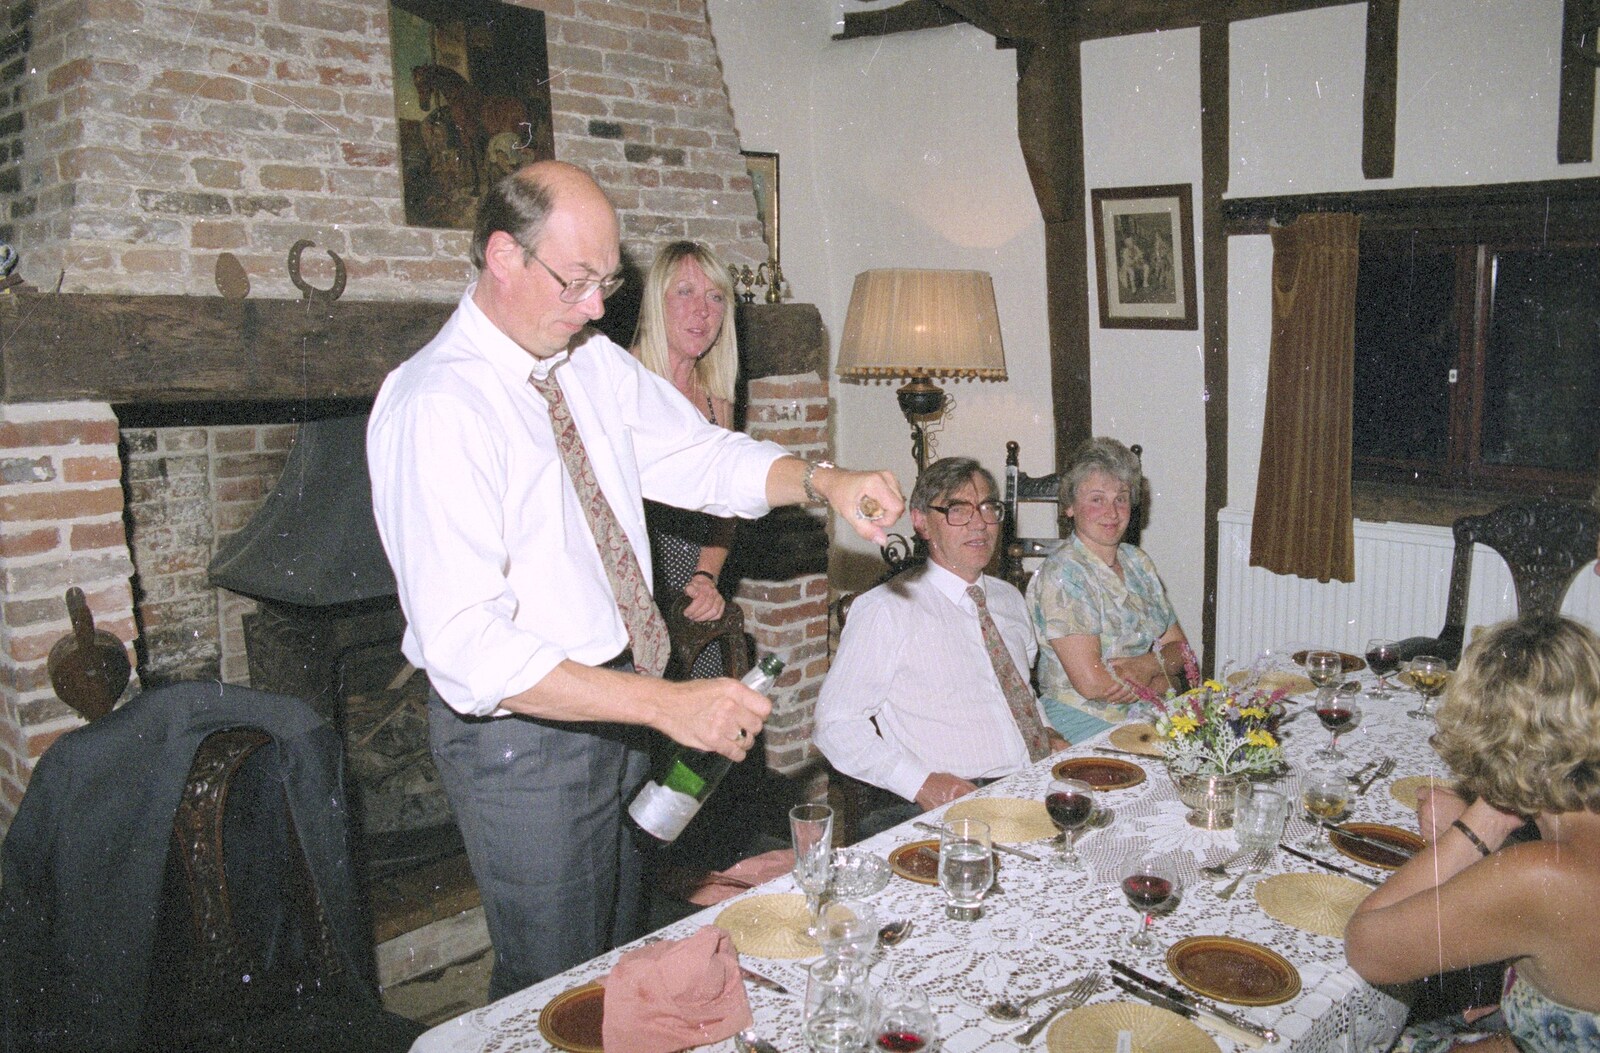 John Chapman uncorks a bottle of fizz from Nosher's Dinner Party, Stuston, Suffolk - 14th September 1991